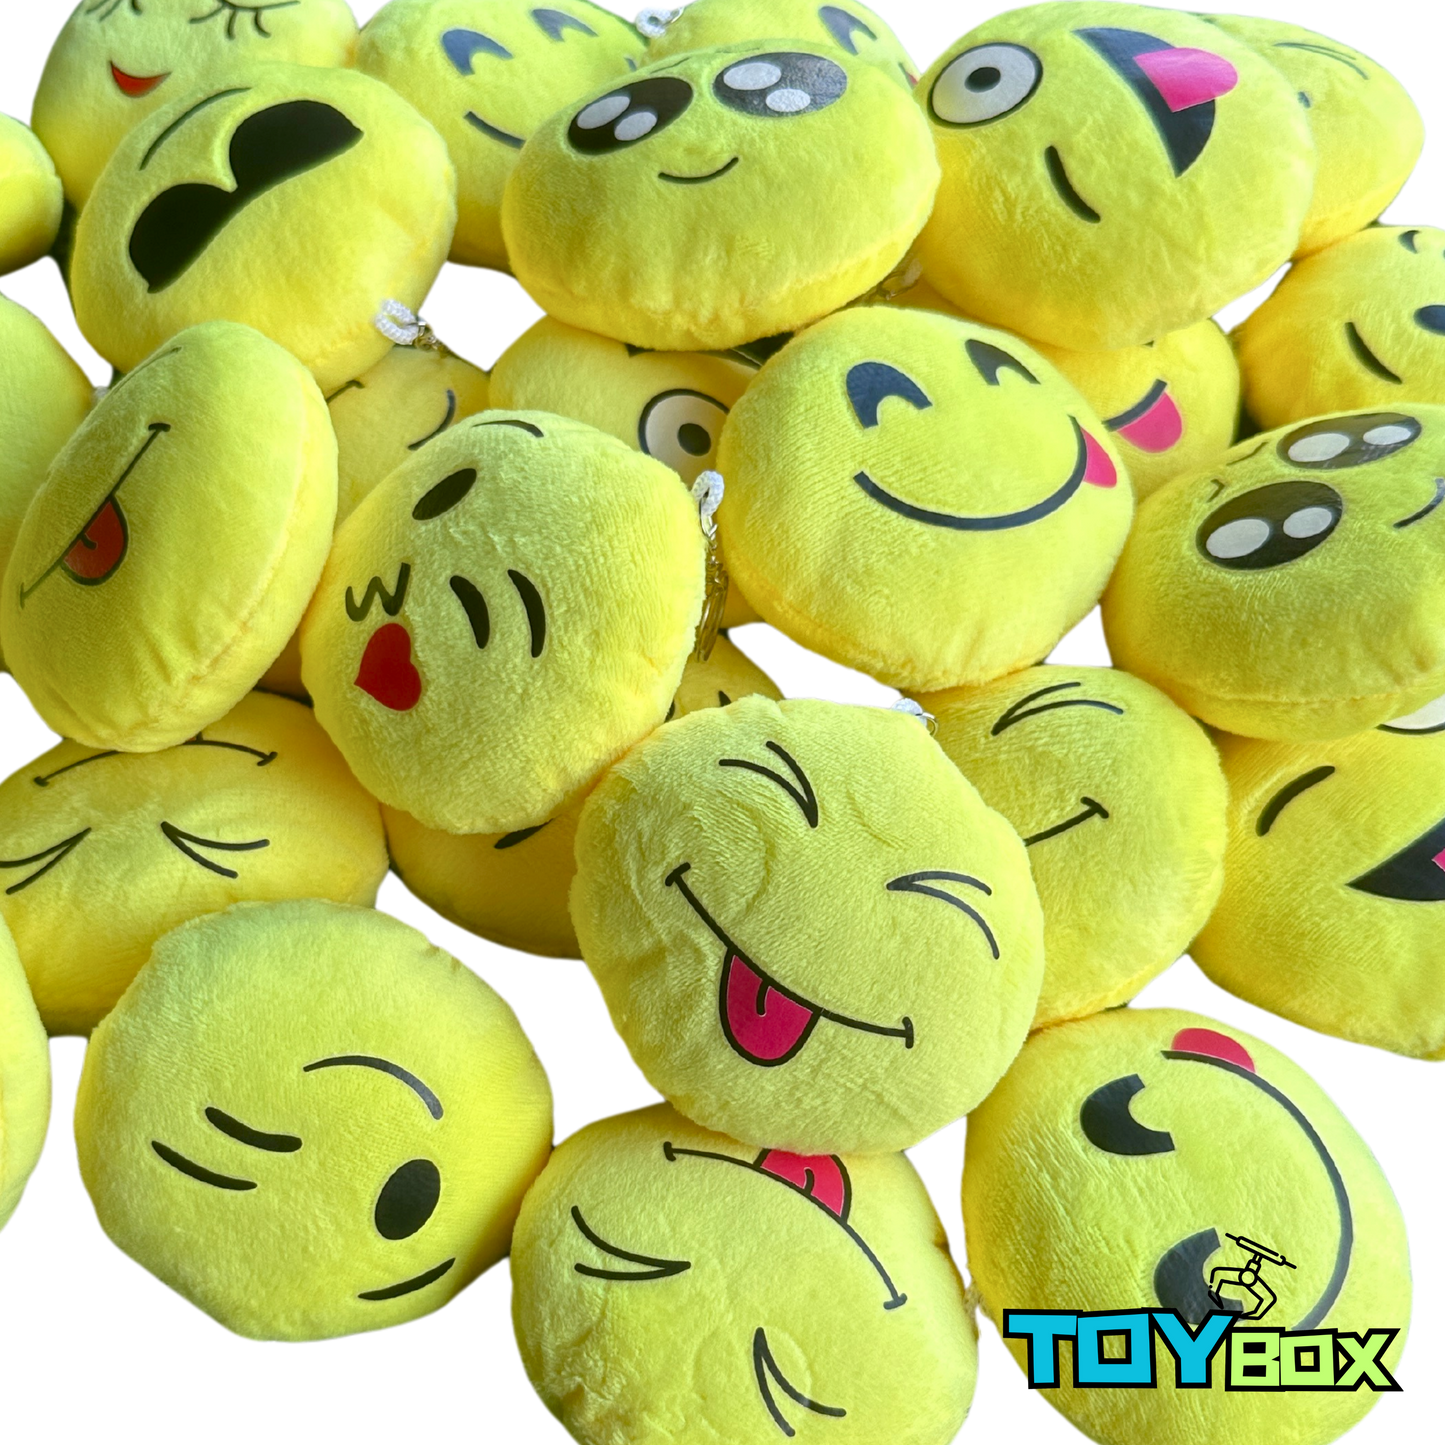 ($.69) 100pc 3" Mixed Emoji Plush